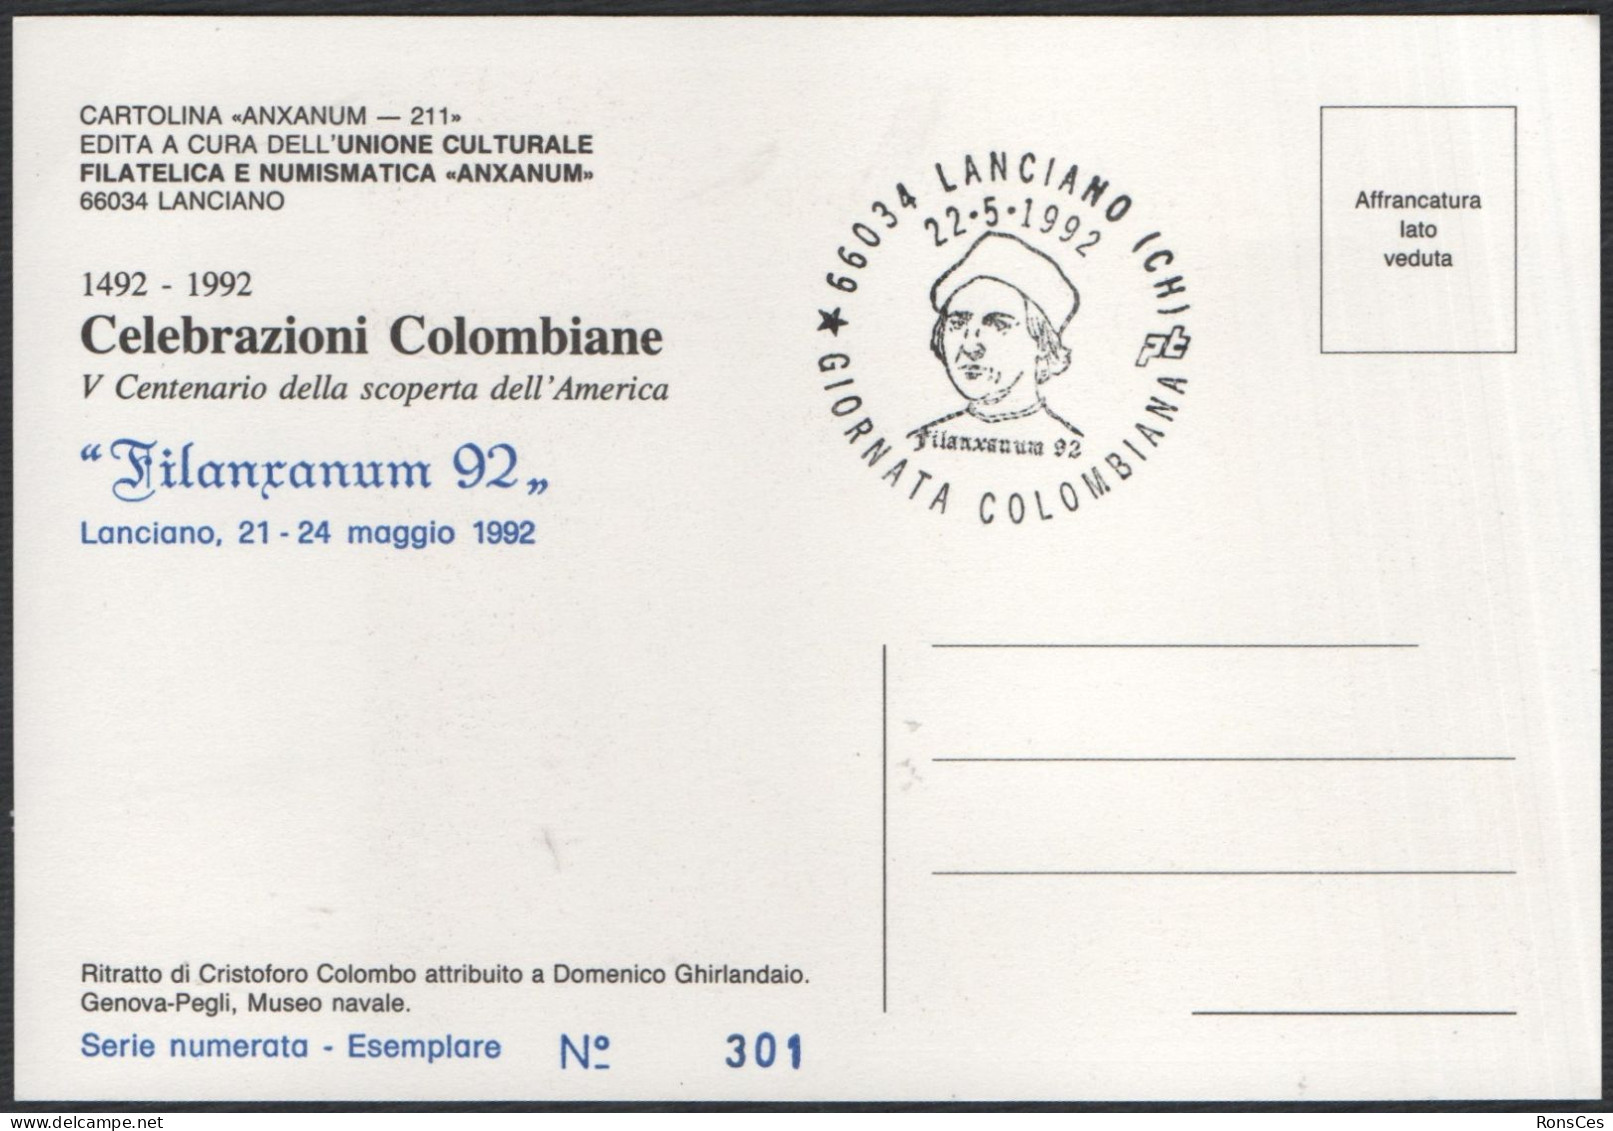 ITALIA LANCIANO (CH) 22.05.1992 - FILANXANUM '92 - GIORNATA COLOMBIANA - CARTOLINA UFFICIALE - A - Expositions Philatéliques